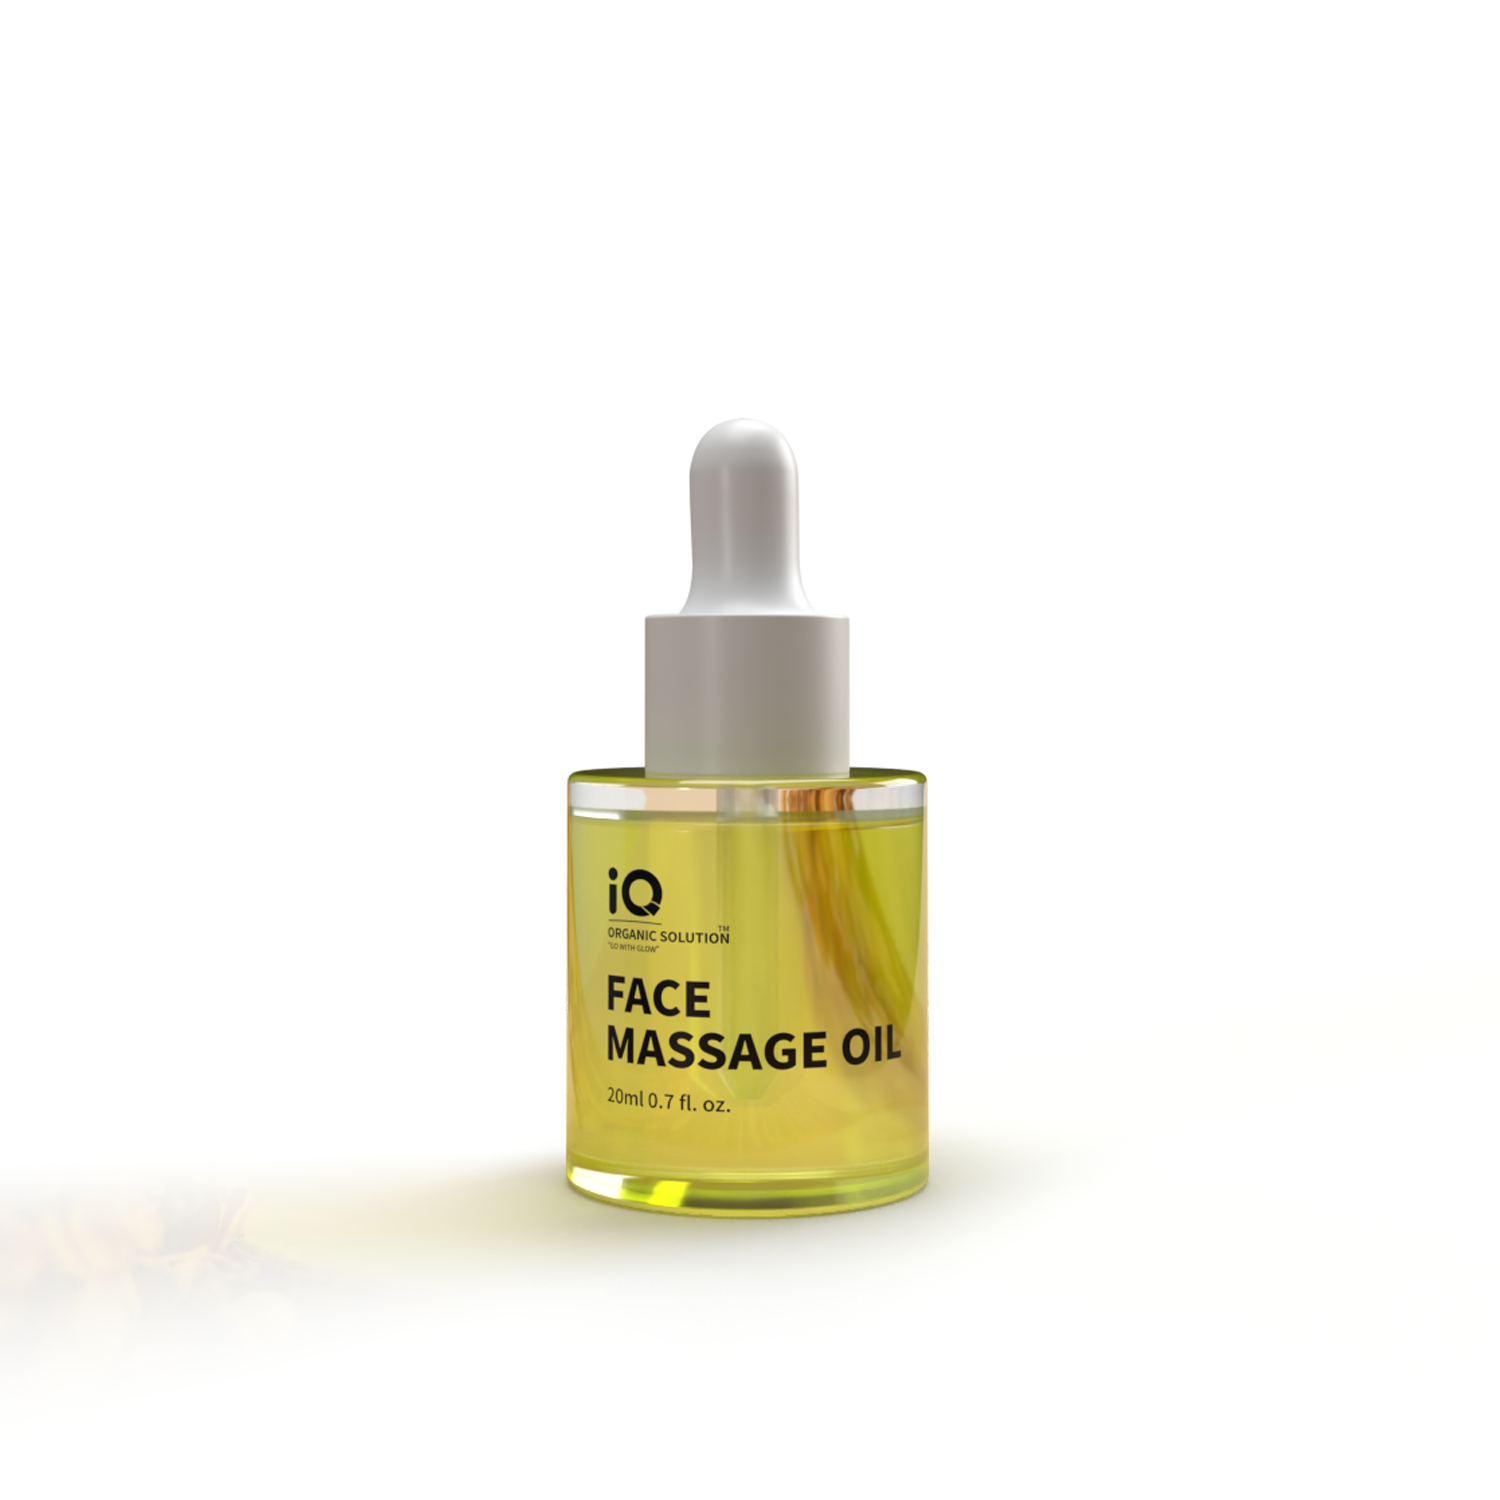 Face Massage Oil - IQ Organic Solution™️